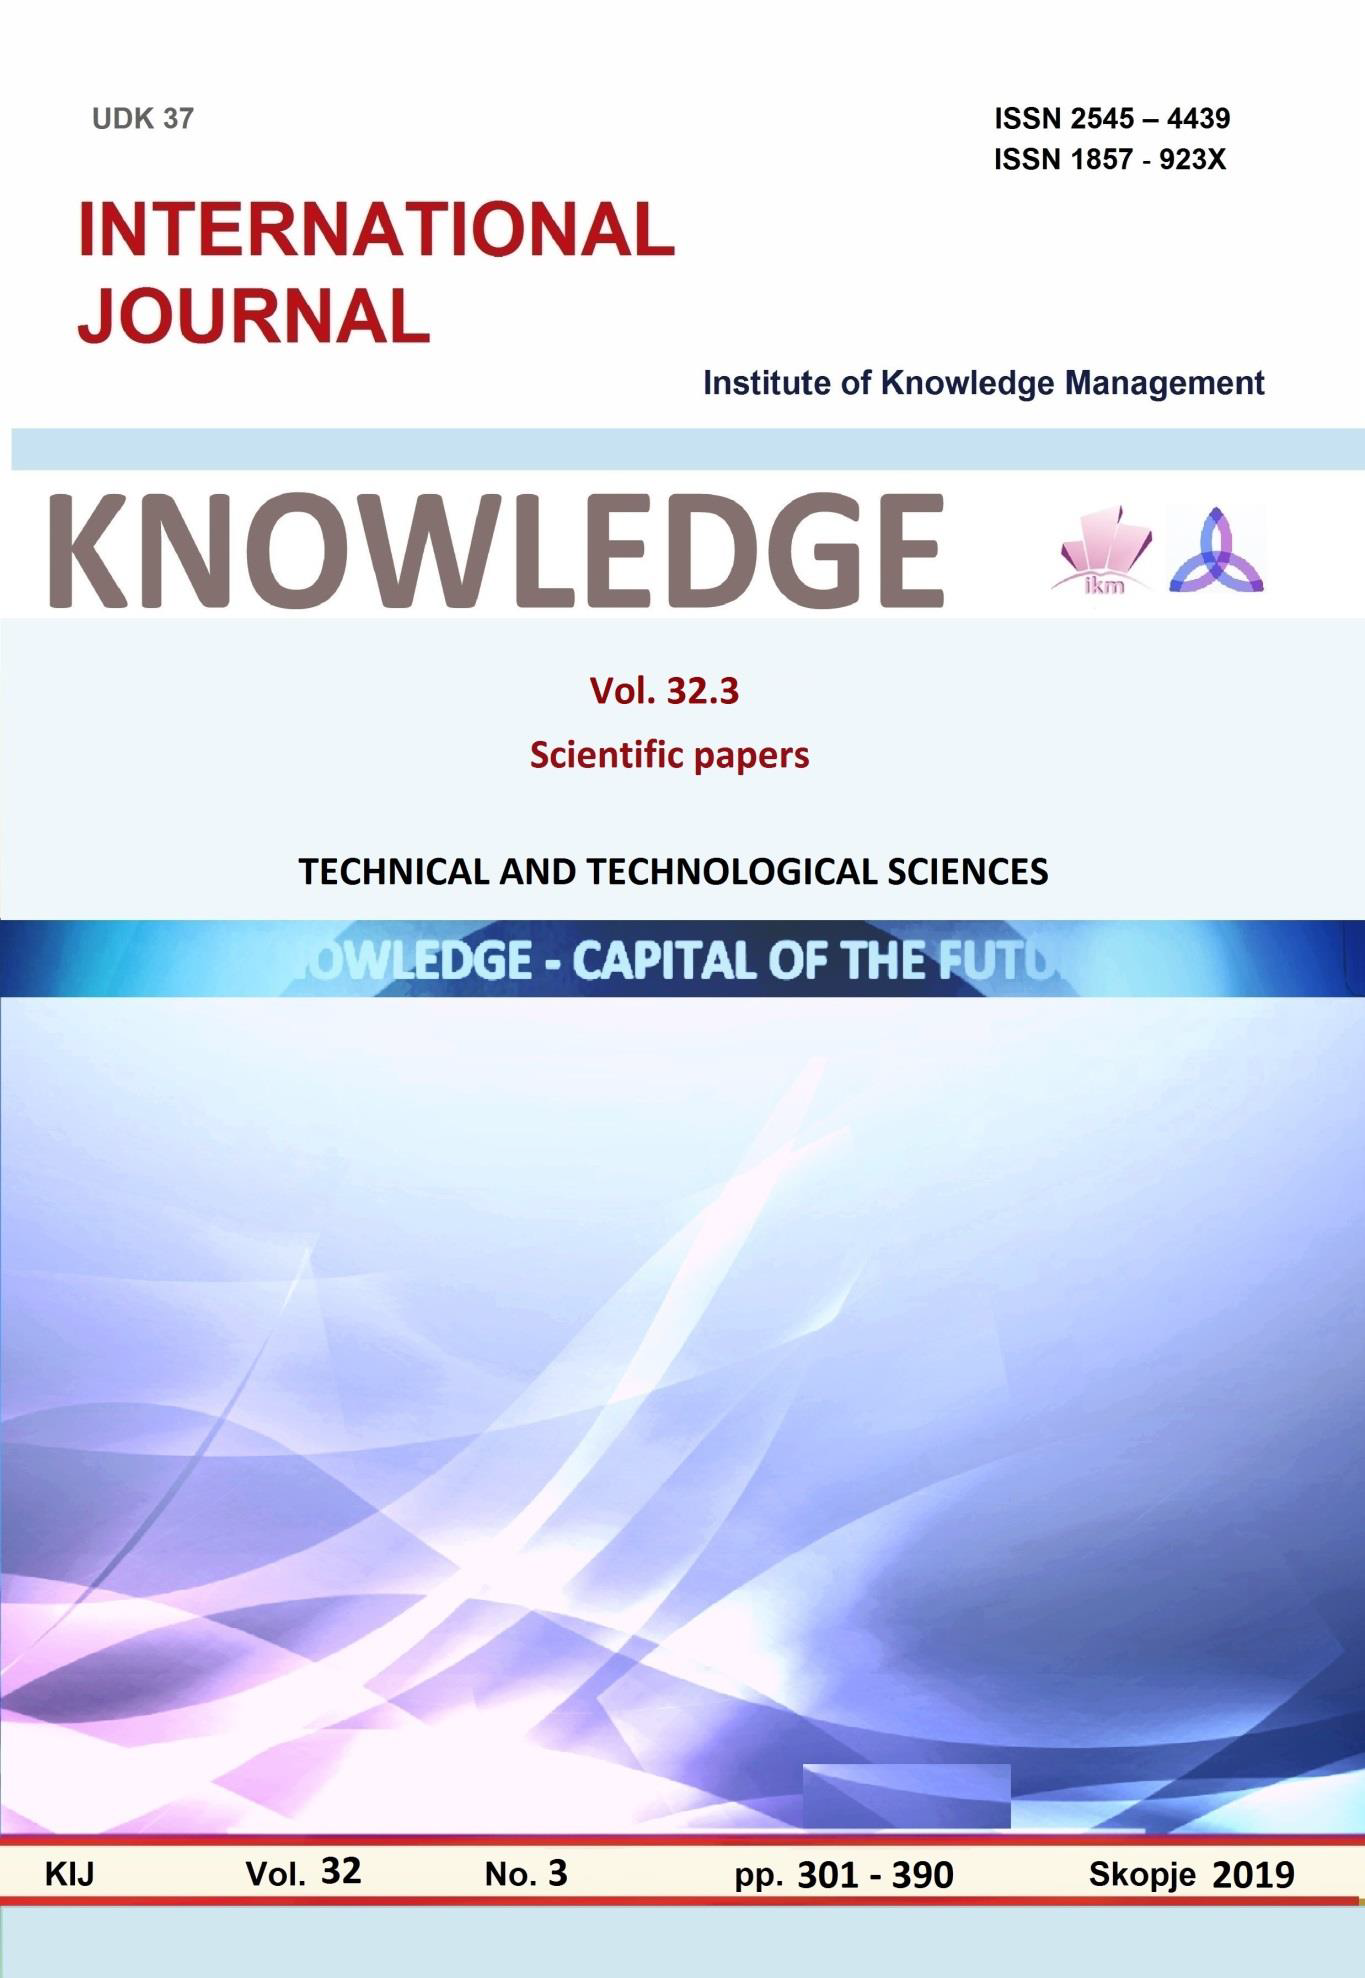 					View Vol. 32 No. 3 (2019): Knowledge International Journal
				